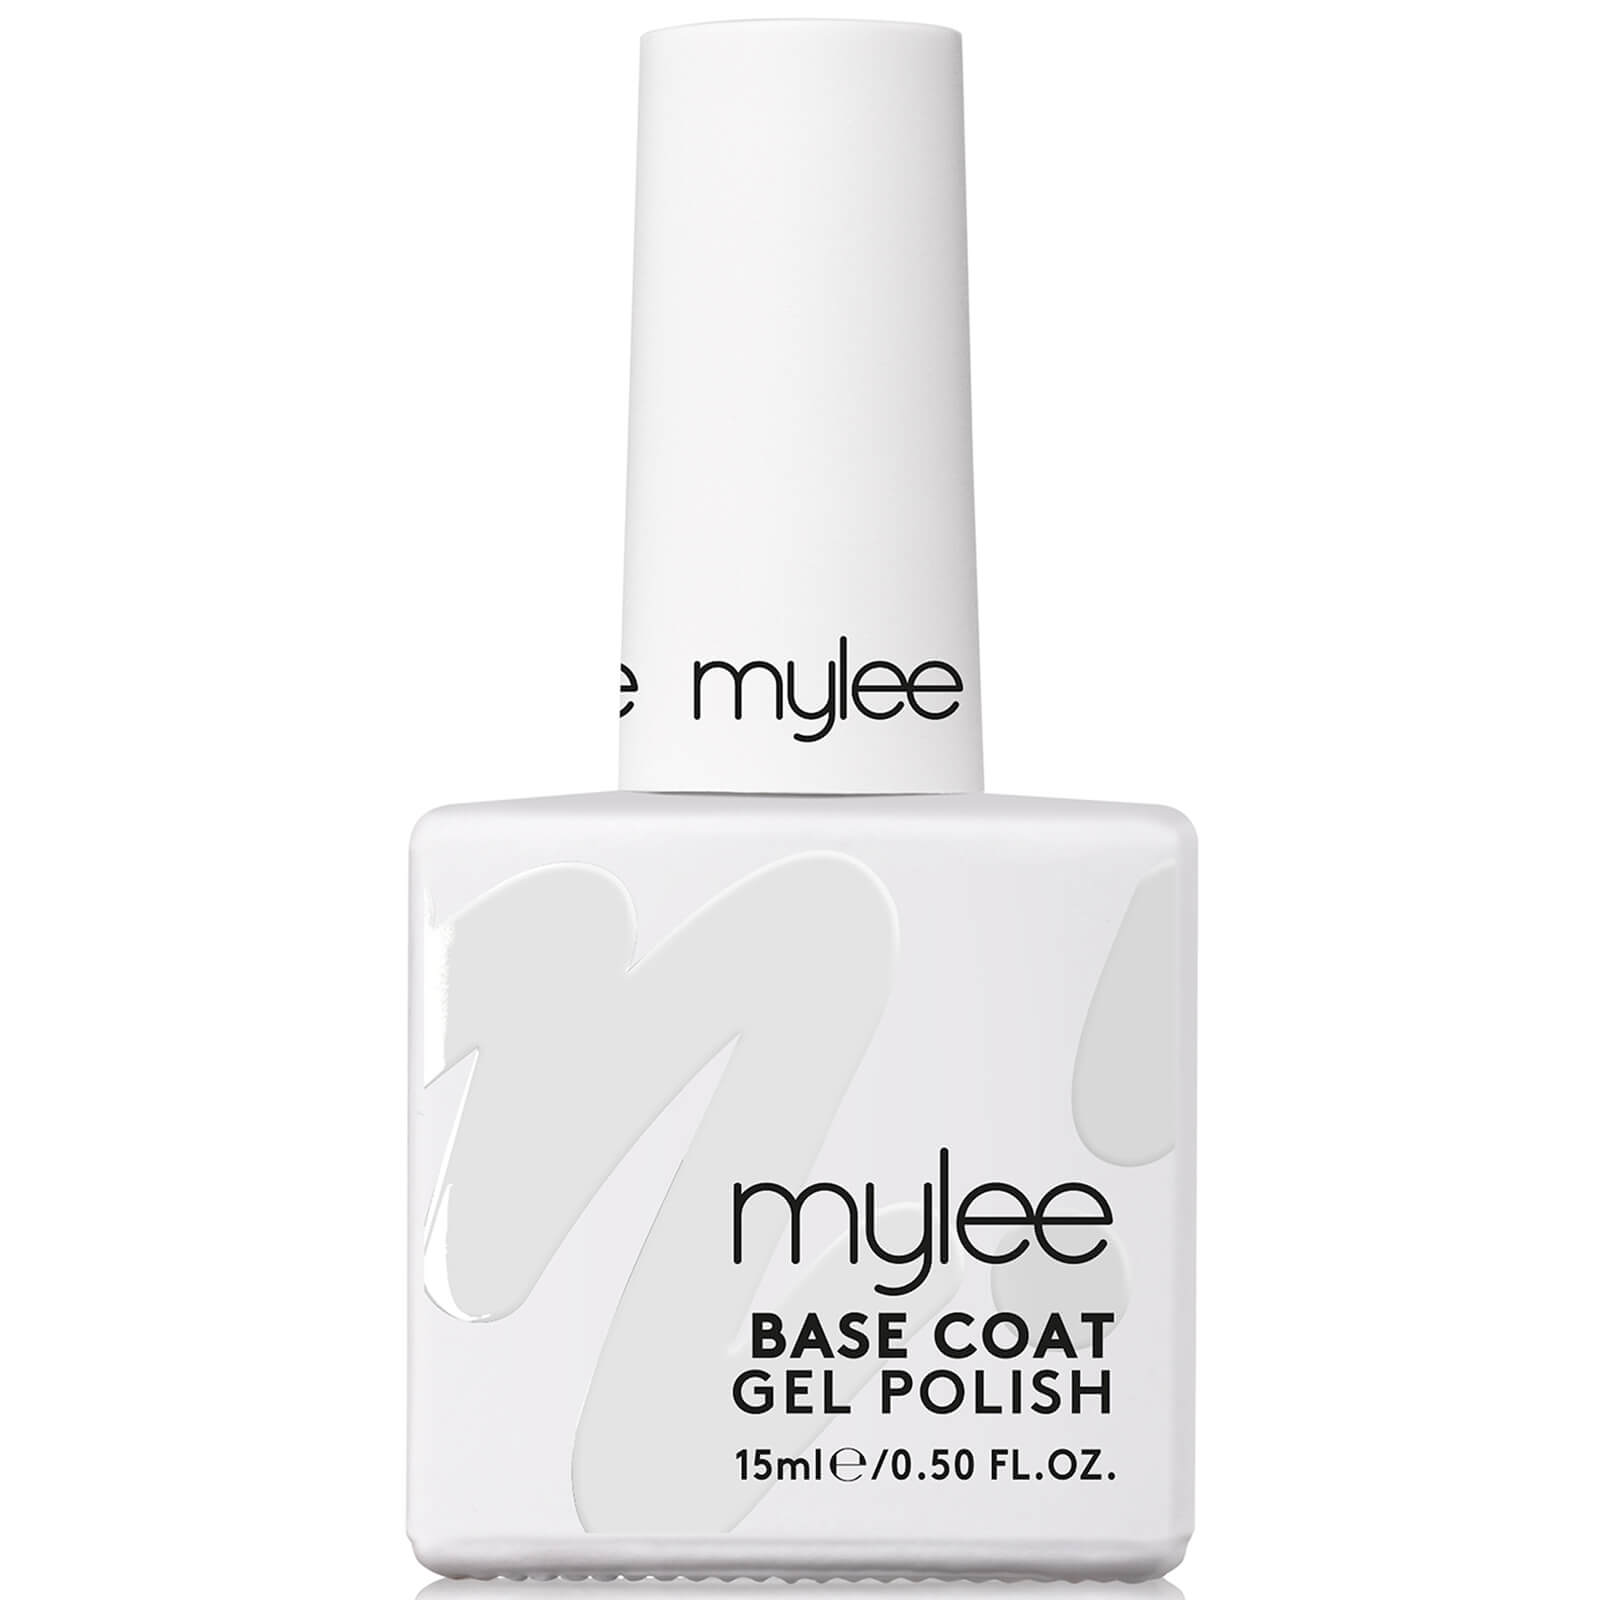 Mylee Mygel Gel Polish - Base Coat 15ml In White